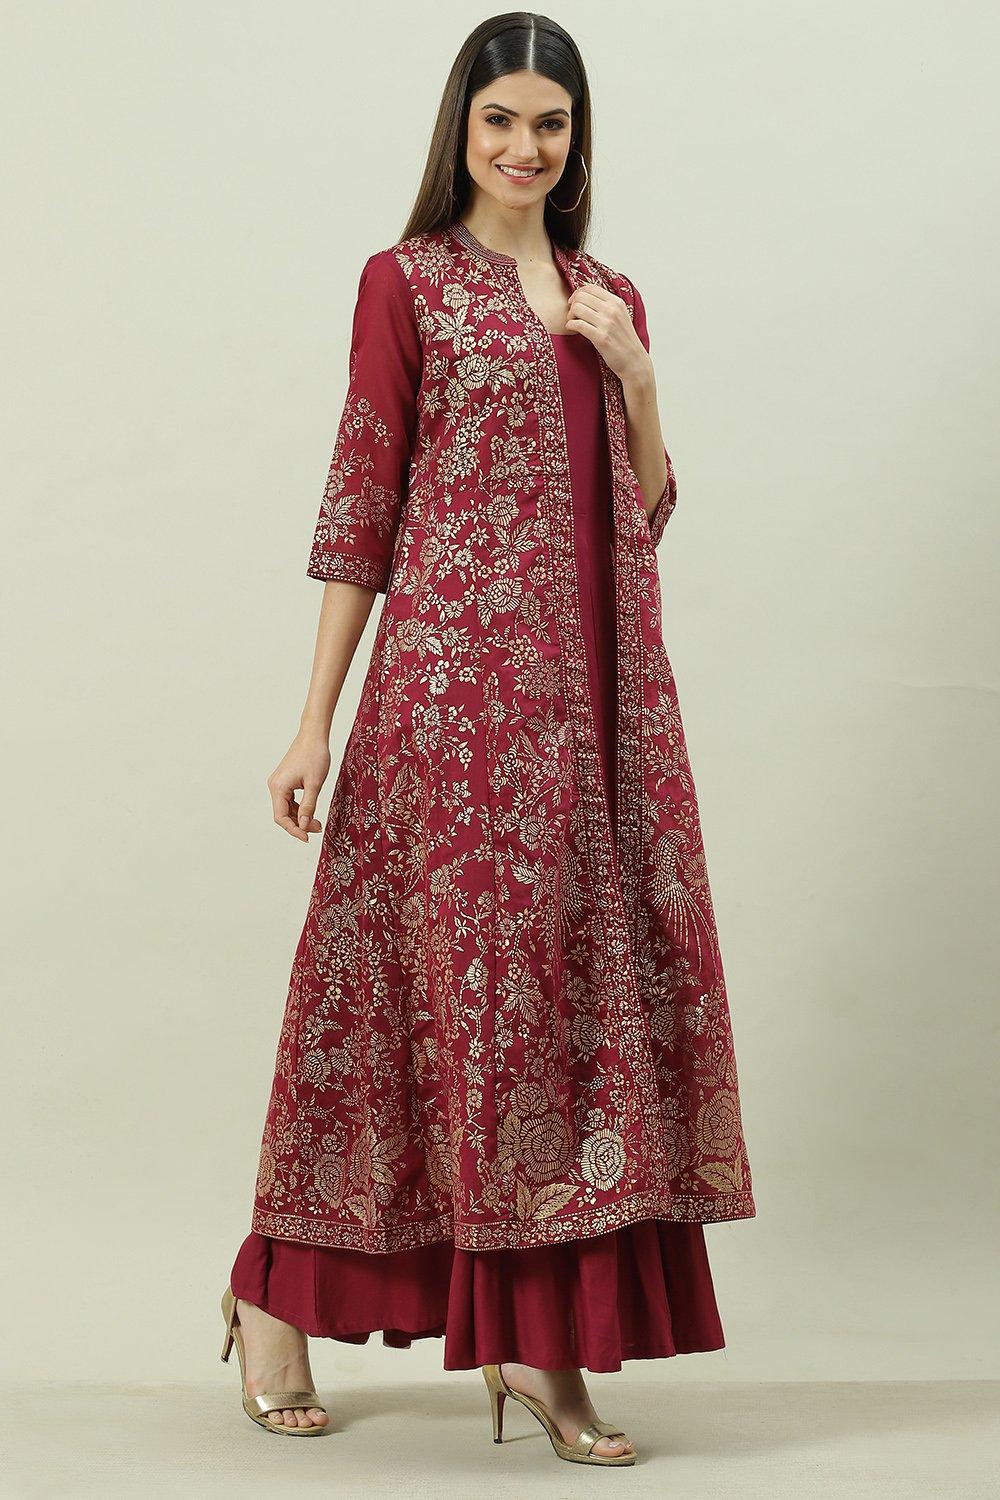 Buy online Plum Art Silk Dress for women at best price at biba.in ...